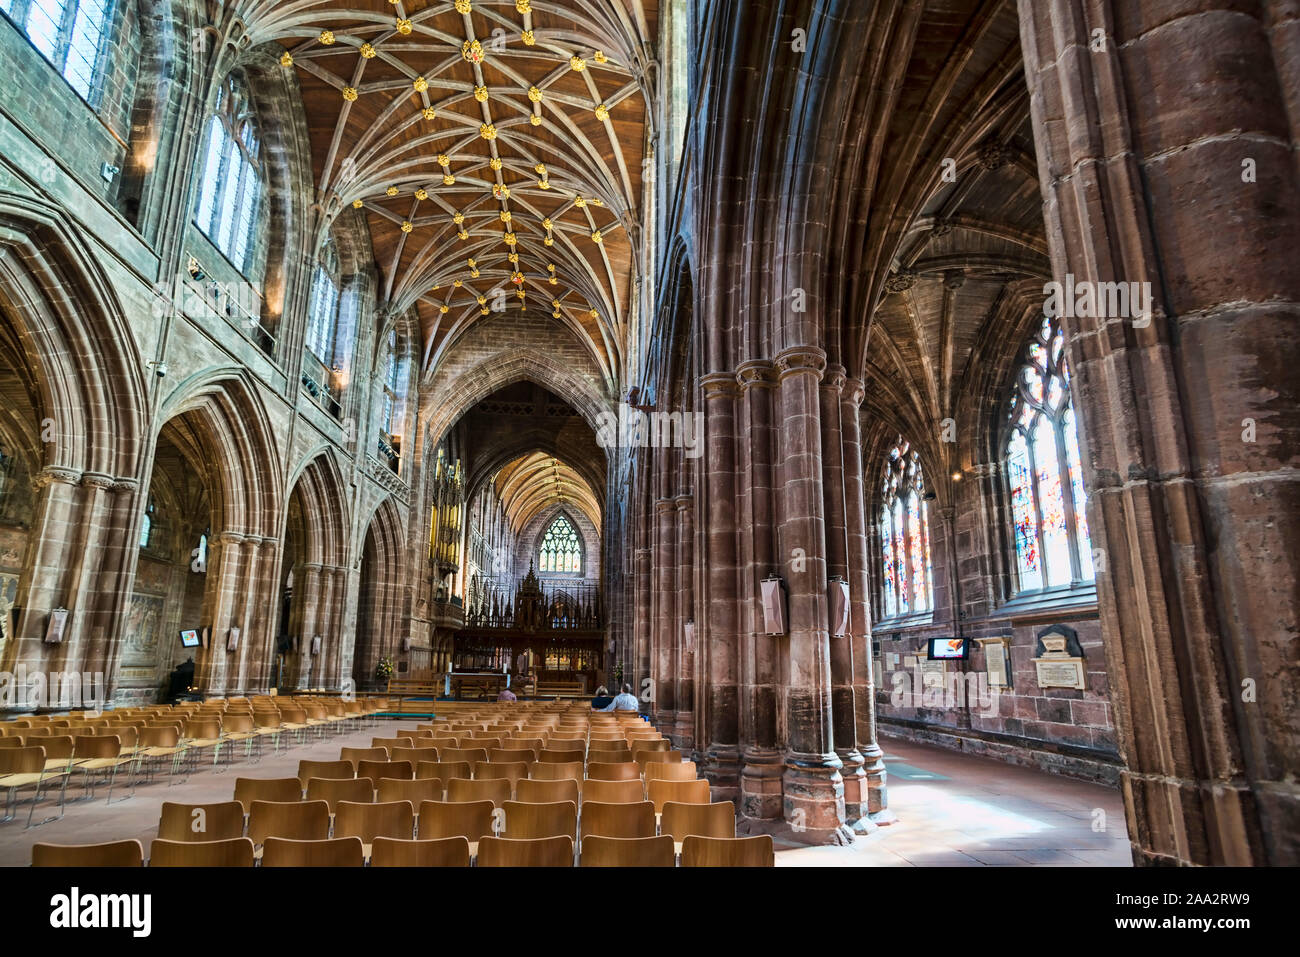 La Catedral de Chester, interno, techo abovedado, Cheshire, Inglaterra, Reino Unido. Foto de stock